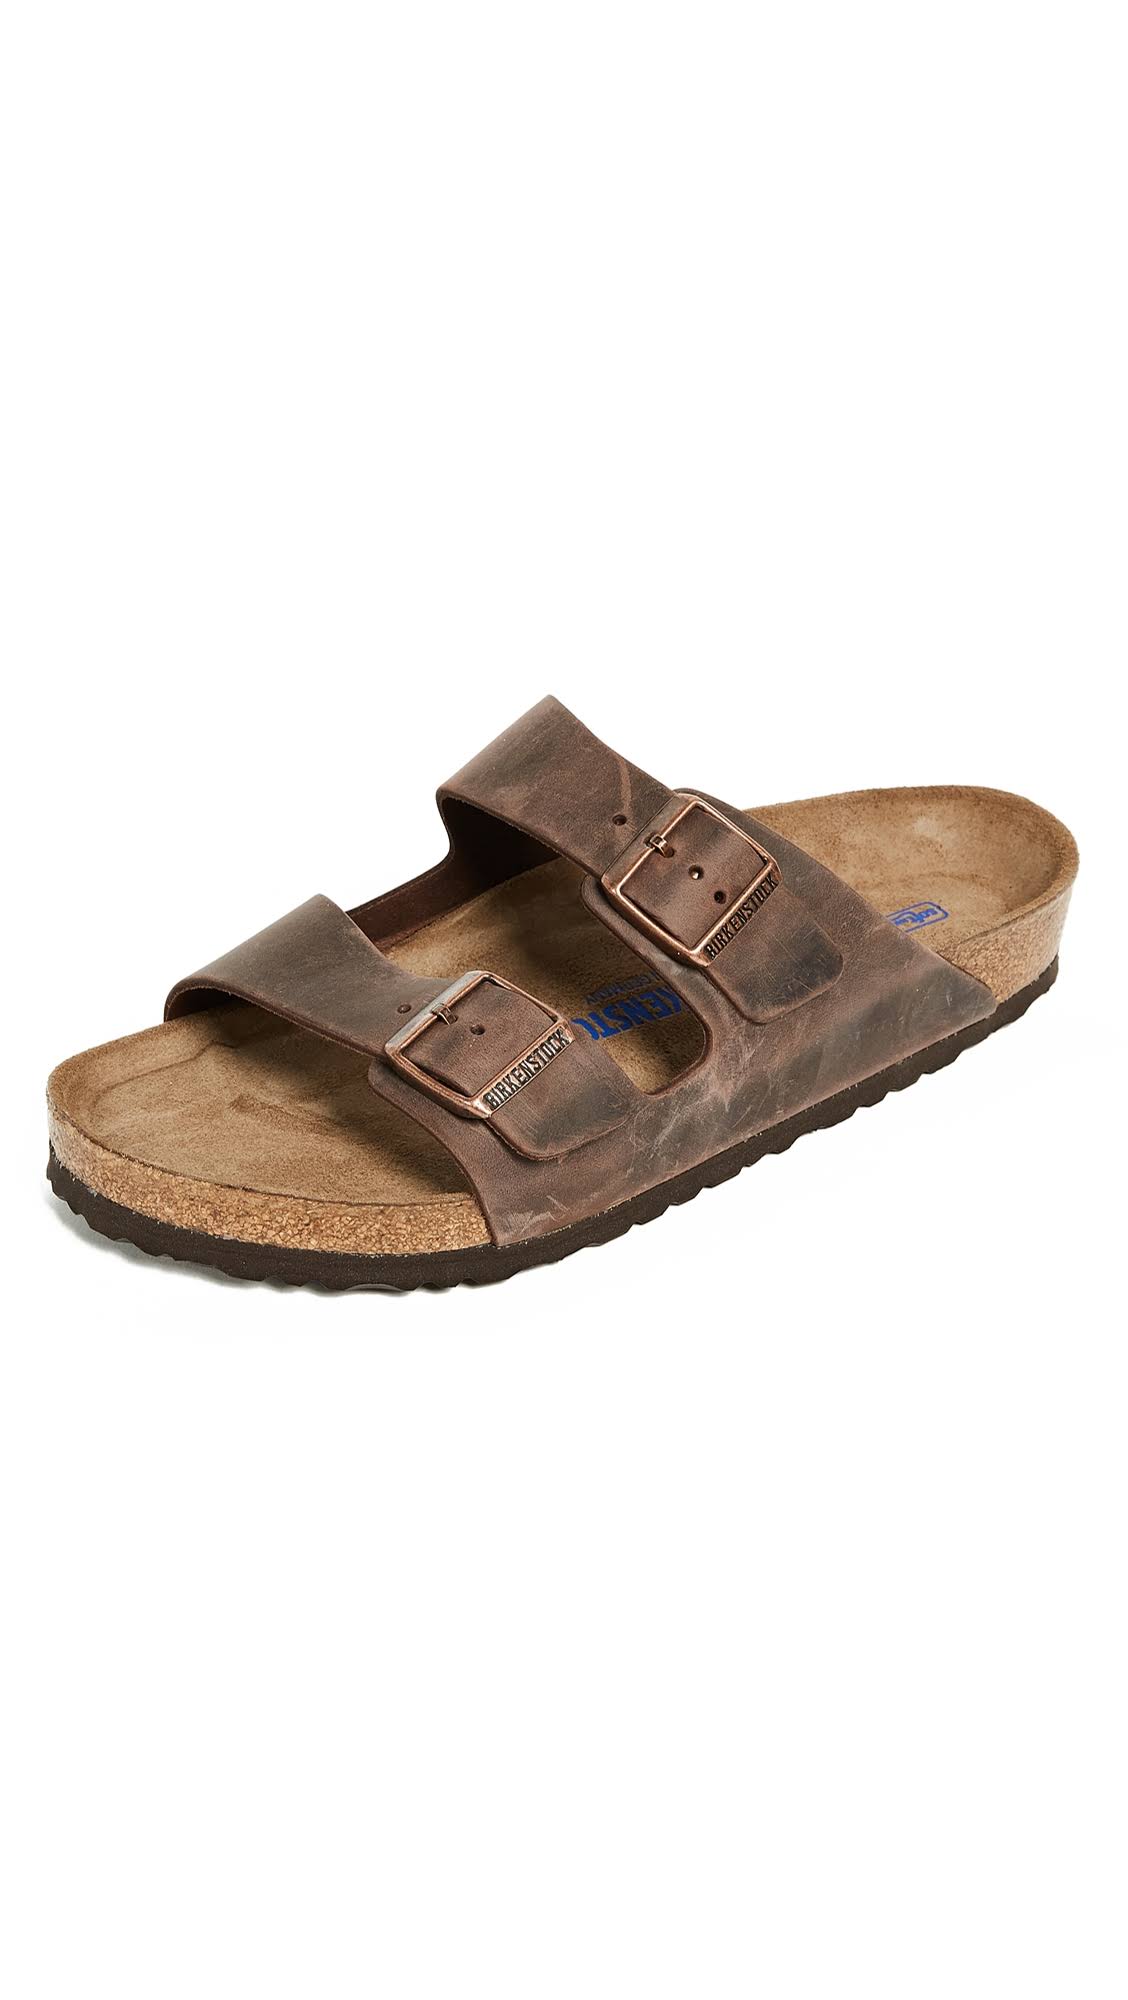 Birkenstock Unisex Arizona Habana Oiled Leather Sandals - Brown, 11-11.5 US